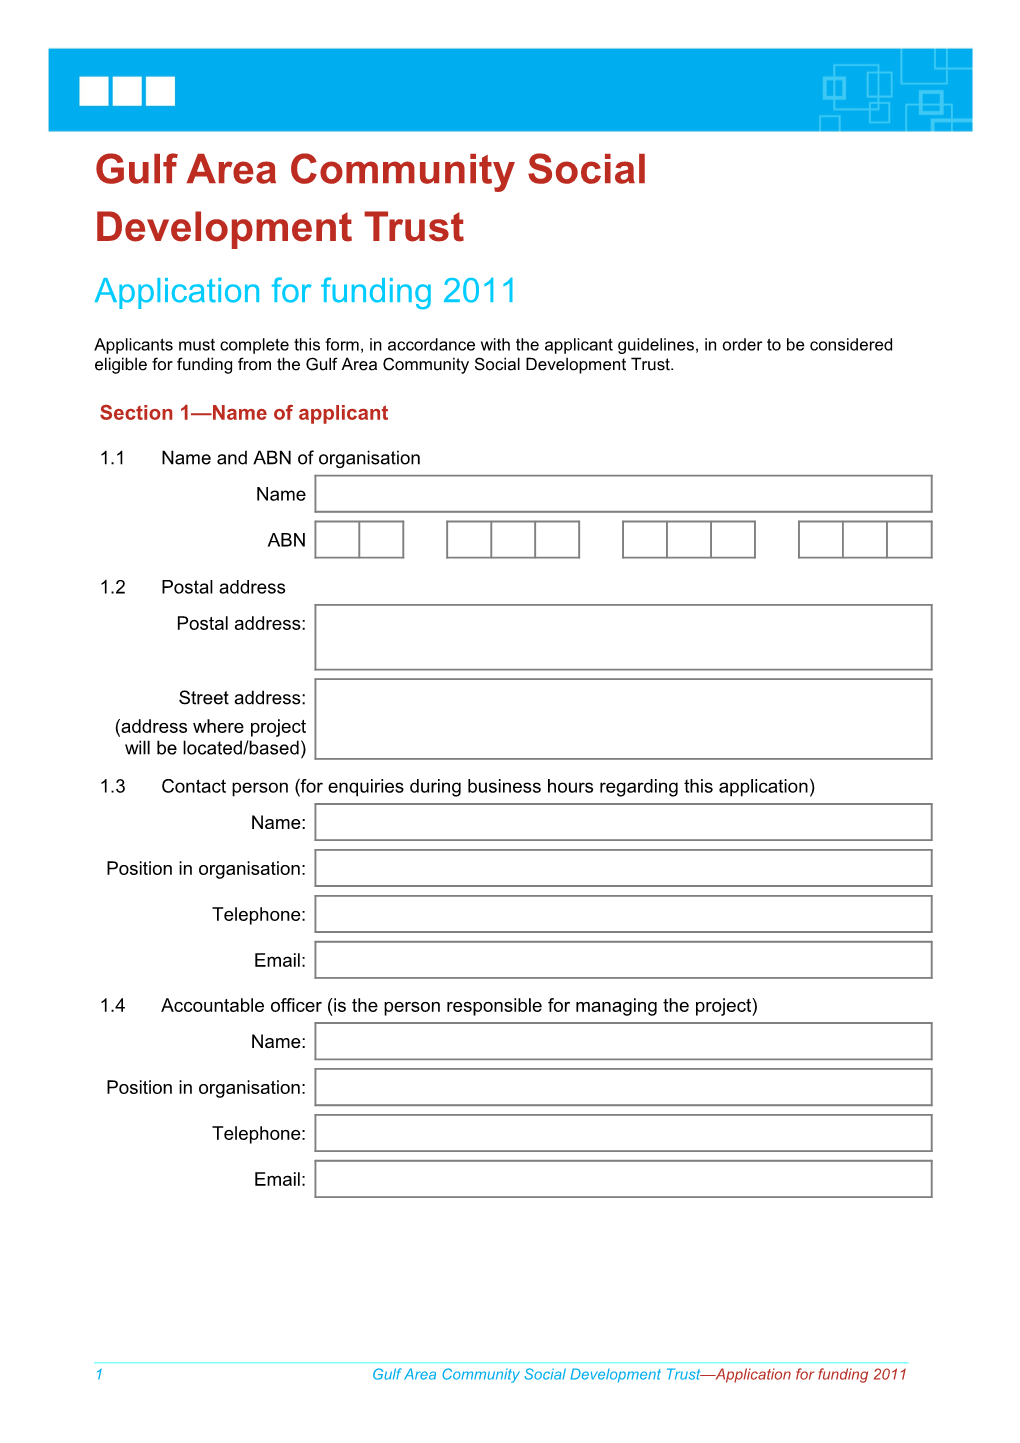 Gulf Area Community Social Development Trust - Application for Funding 2011